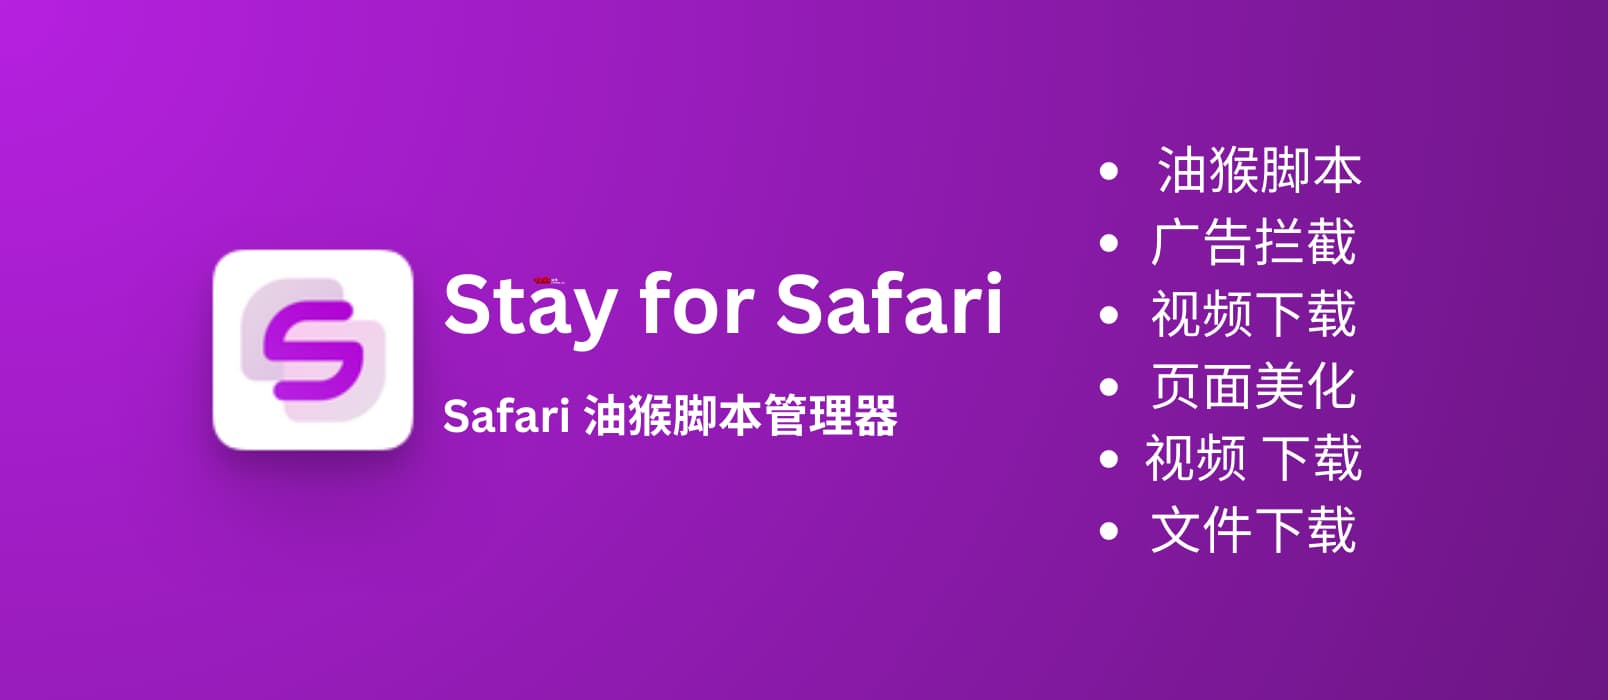 Stay for Safari - 油猴脚本、广告拦截、视频下载、页面美化等 7 个功能的 Safari 扩展[iOS/macOS]